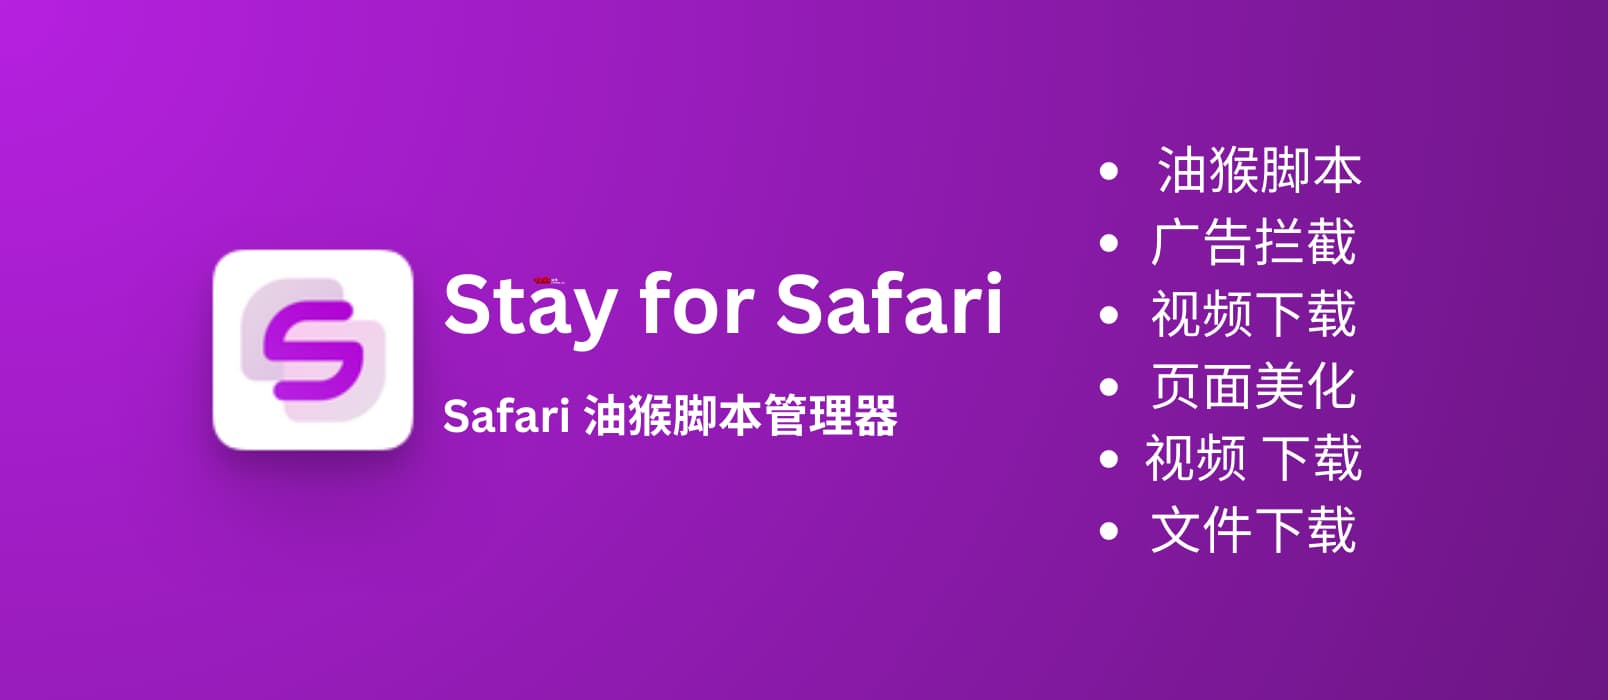 Stay for Safari - 油猴脚本、广告拦截、视频下载、页面美化等 7 个功能的 Safari 扩展[iOS/macOS]